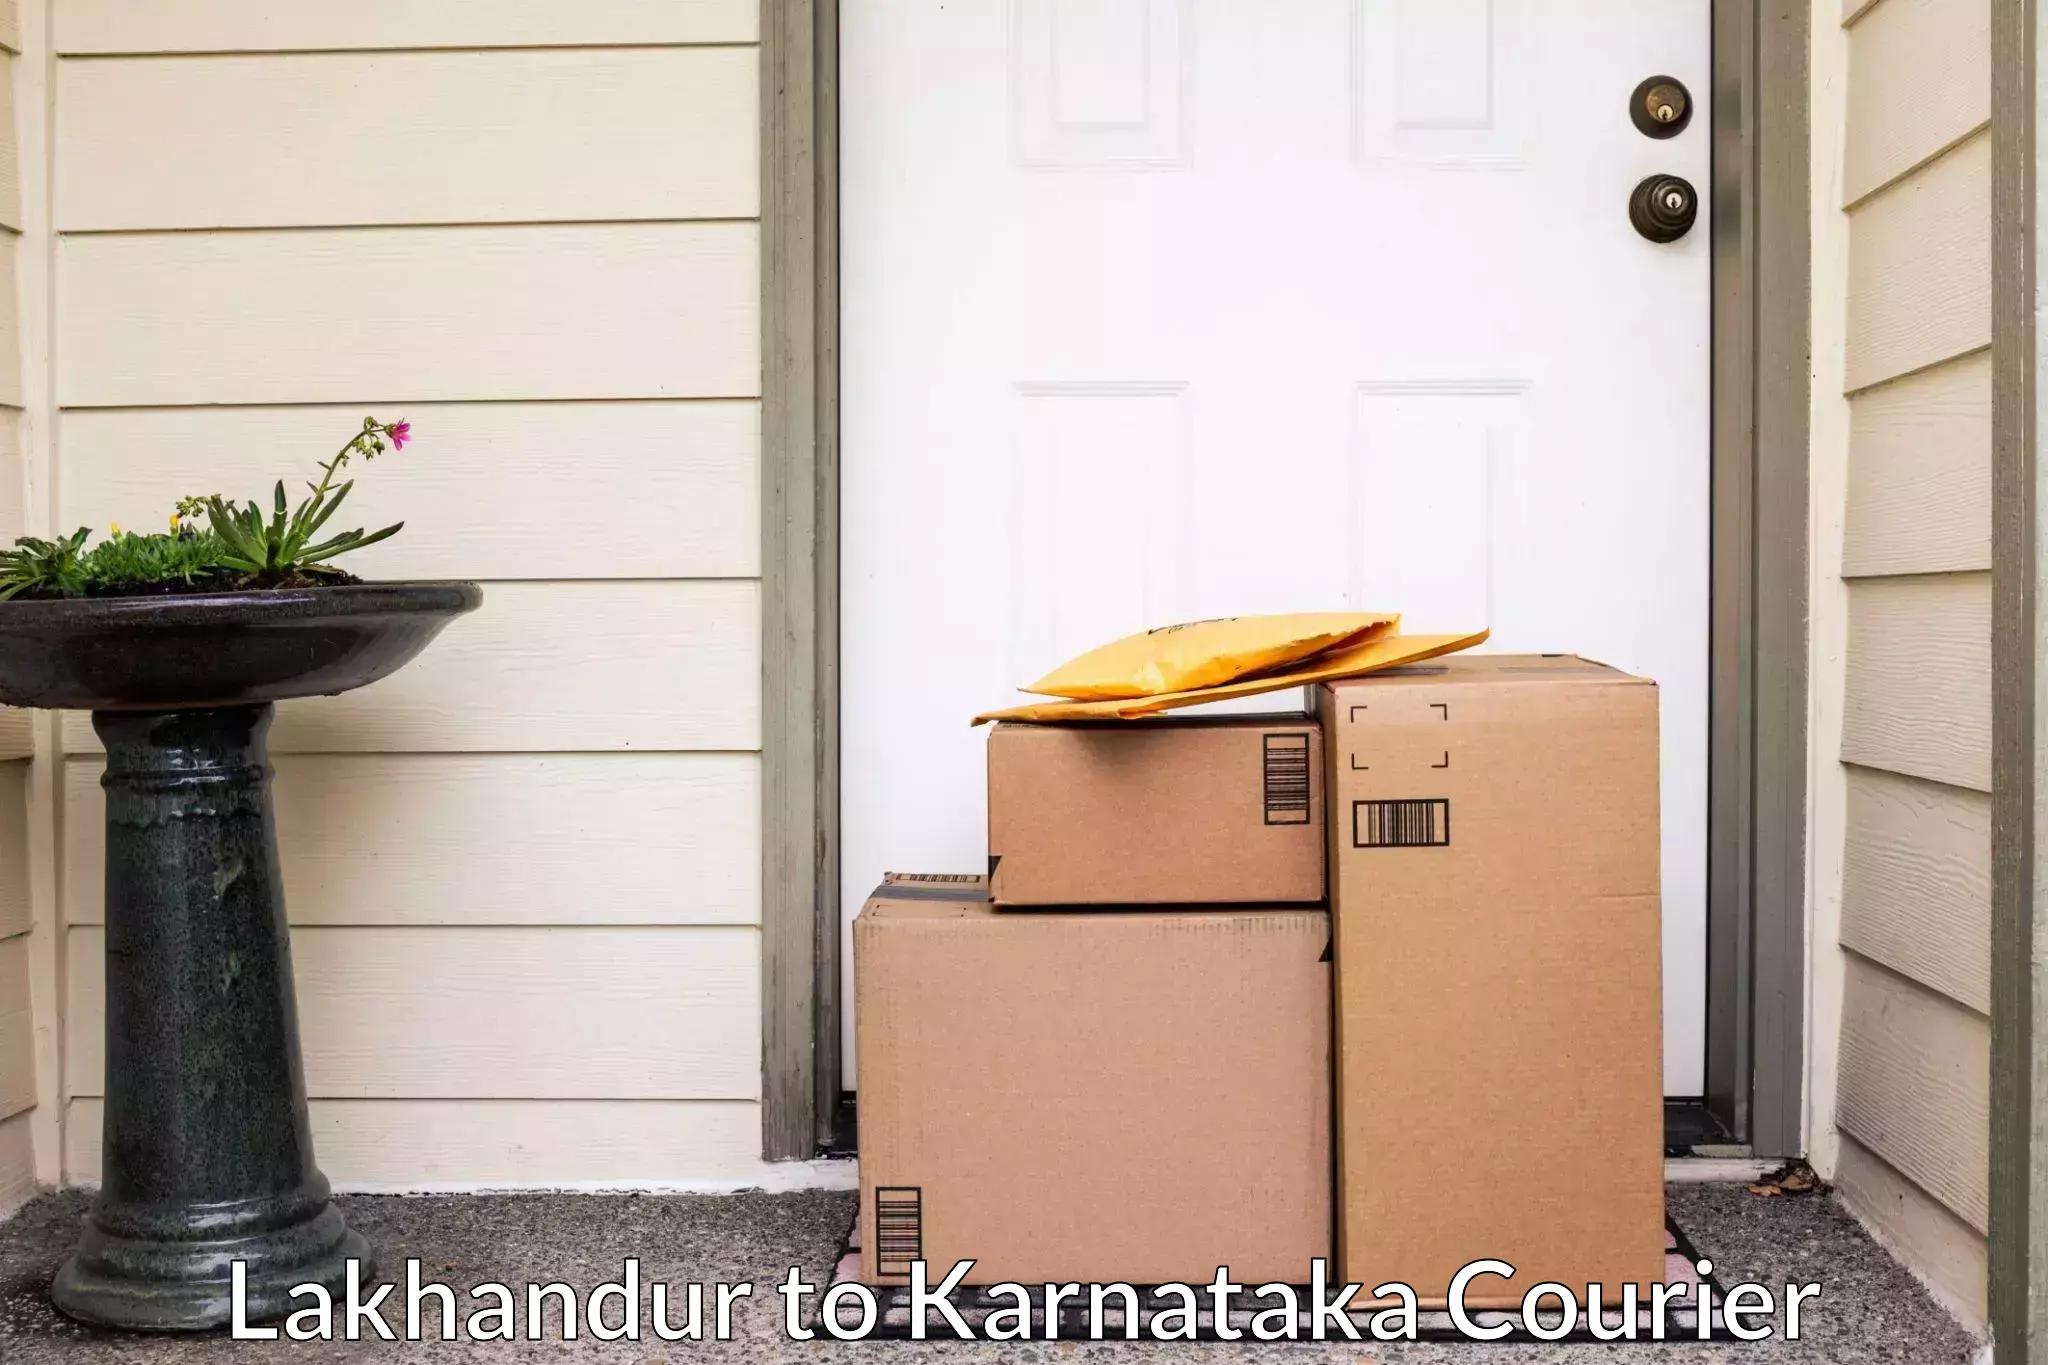 Furniture transport specialists Lakhandur to Karnataka